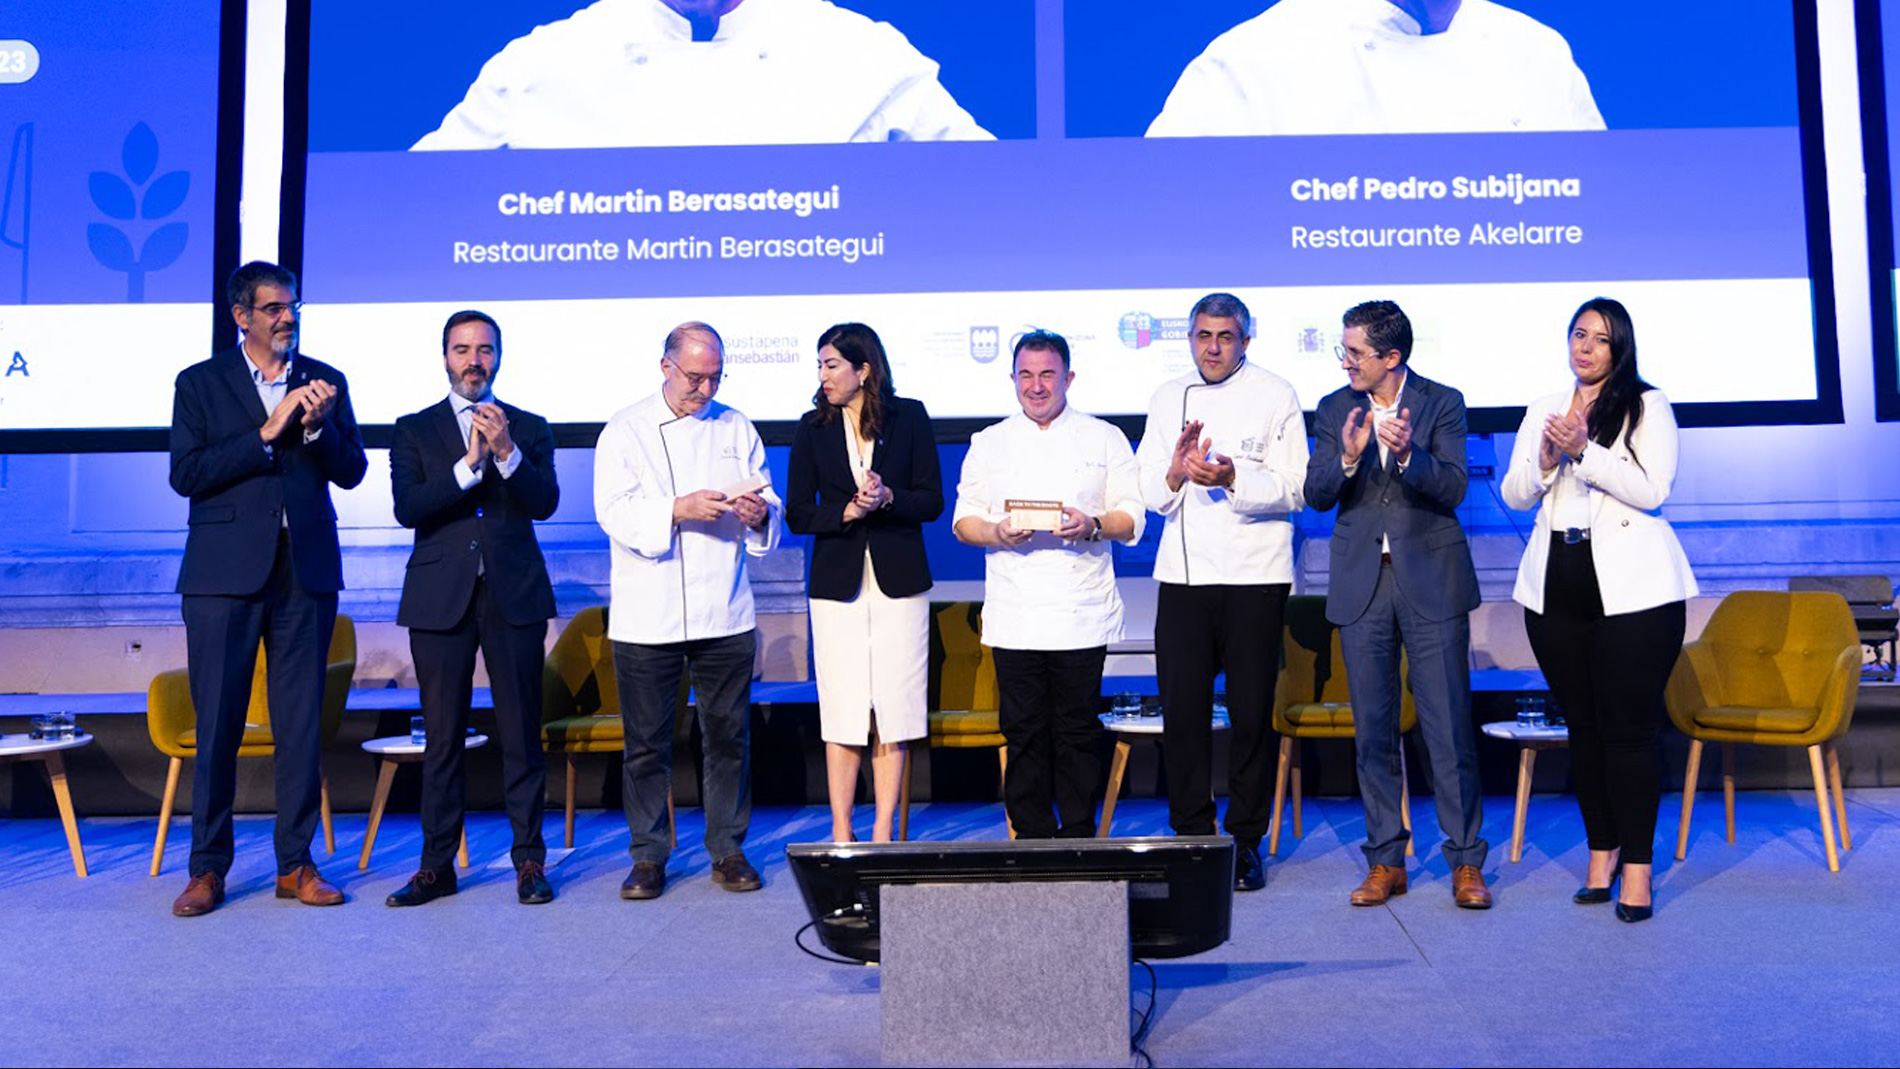 UNWTO appoints Chef Fatmata Binta and Chefs Martín Berasategi and Pedro Subijana as UNWTO Sustainable Tourism Ambassadors